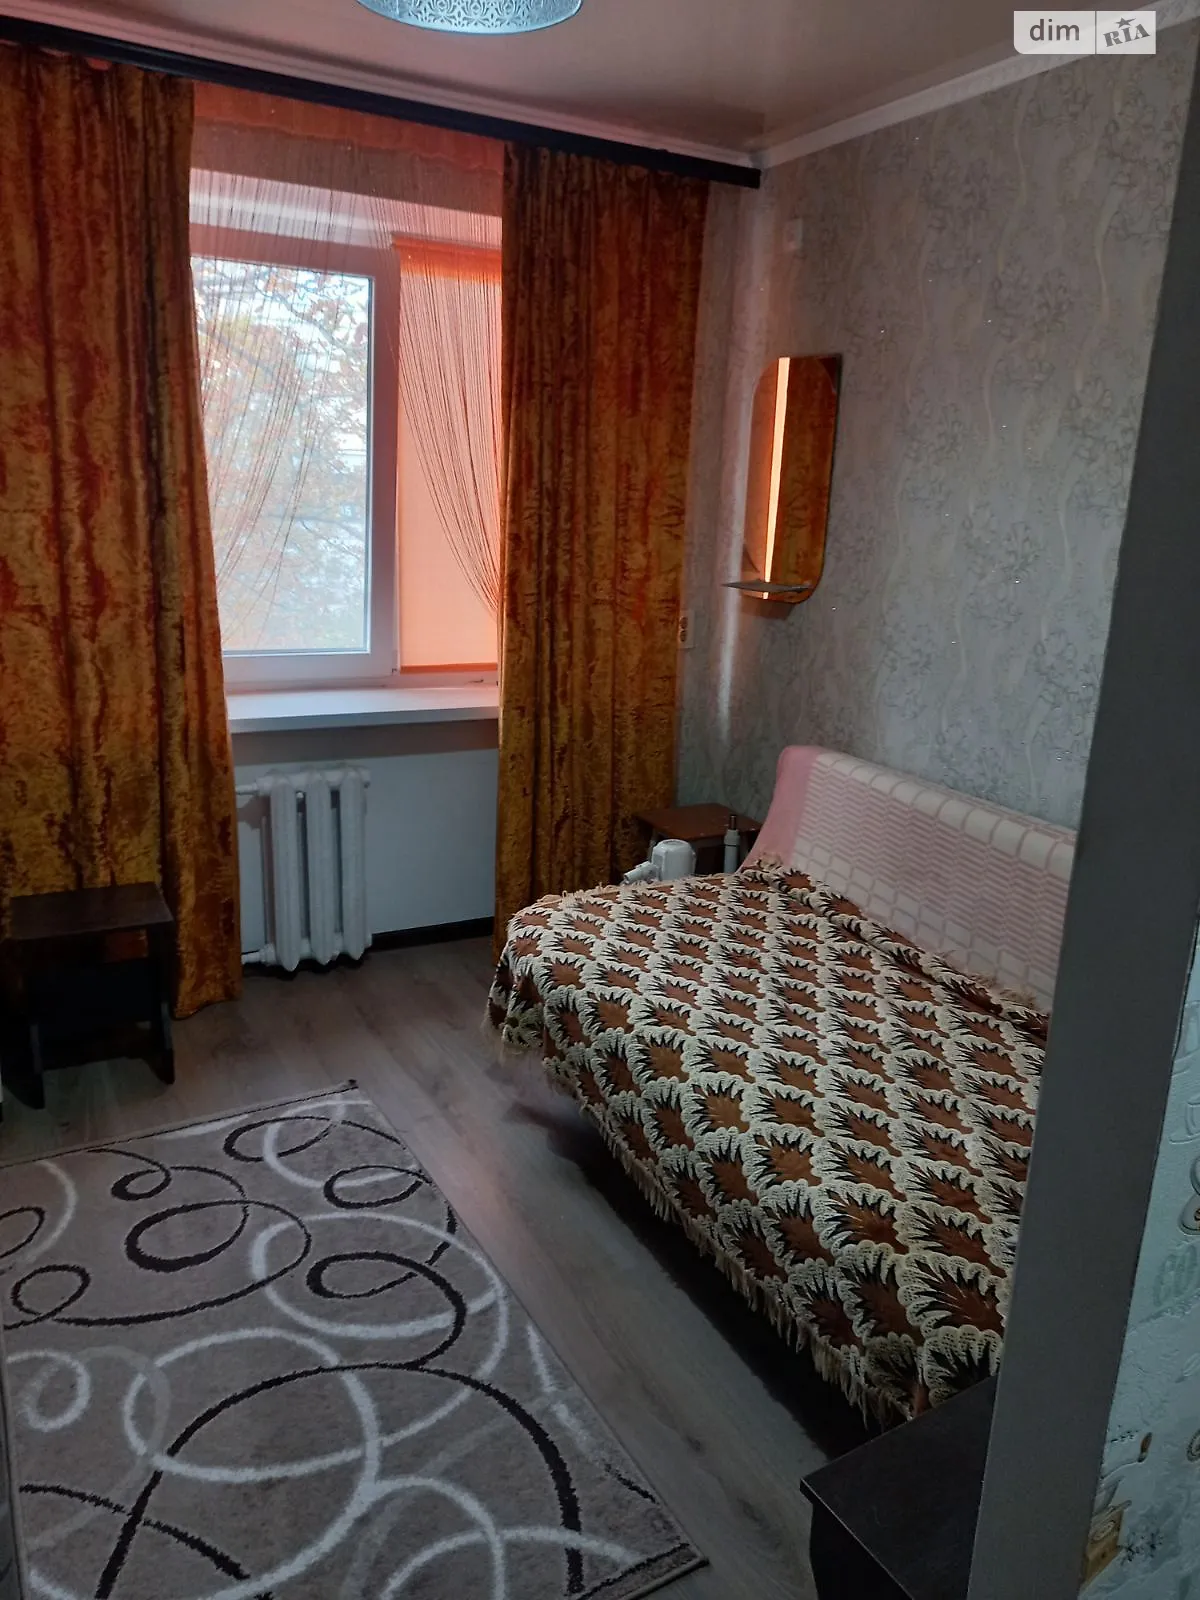 Продается комната 13 кв. м в Черноморске, цена: 10500 $ - фото 1